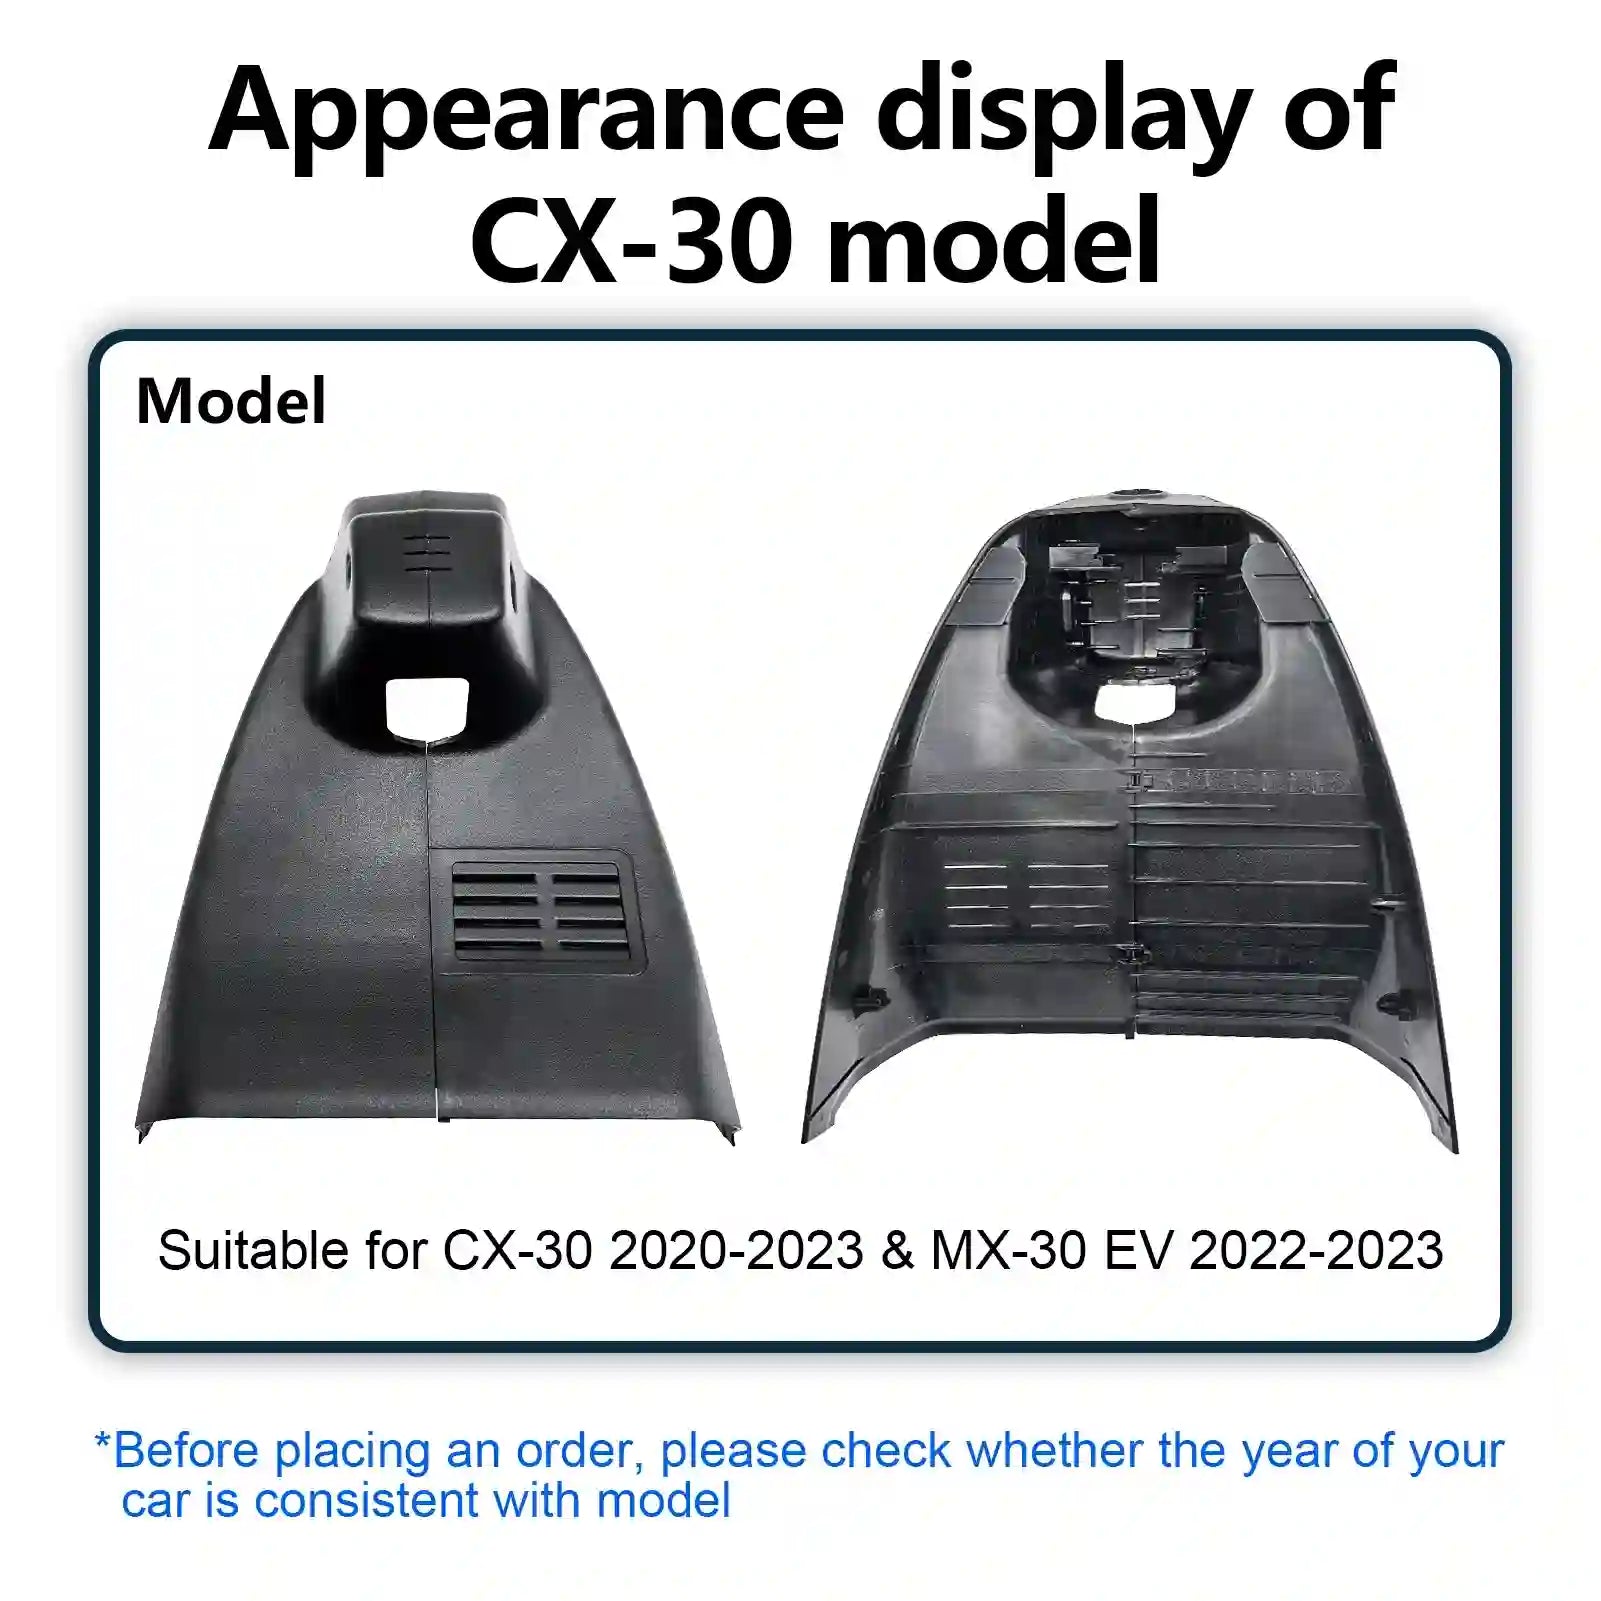 4K Dash Cam Custom fit for Mazda CX-30 2020 2021 2022 2023 & MX-30 EV 2022-2023 (Model A), UHD 2160P Video, Free App & Wifi, 64GB Card